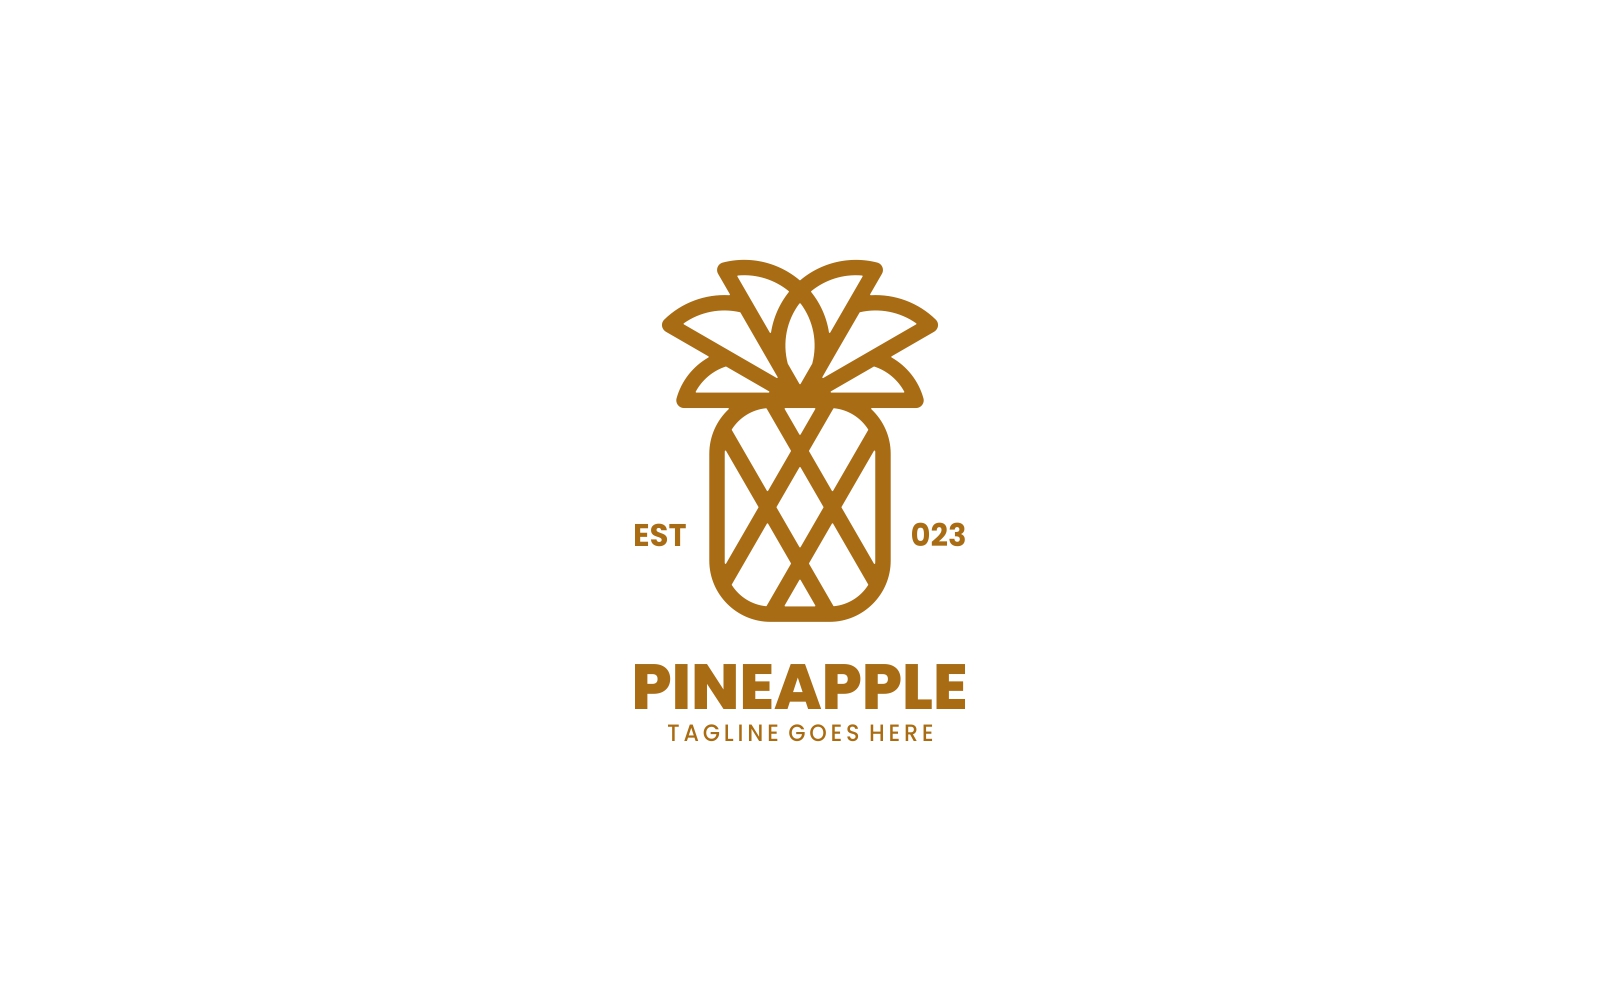 Pineapple Line Art Logo Template